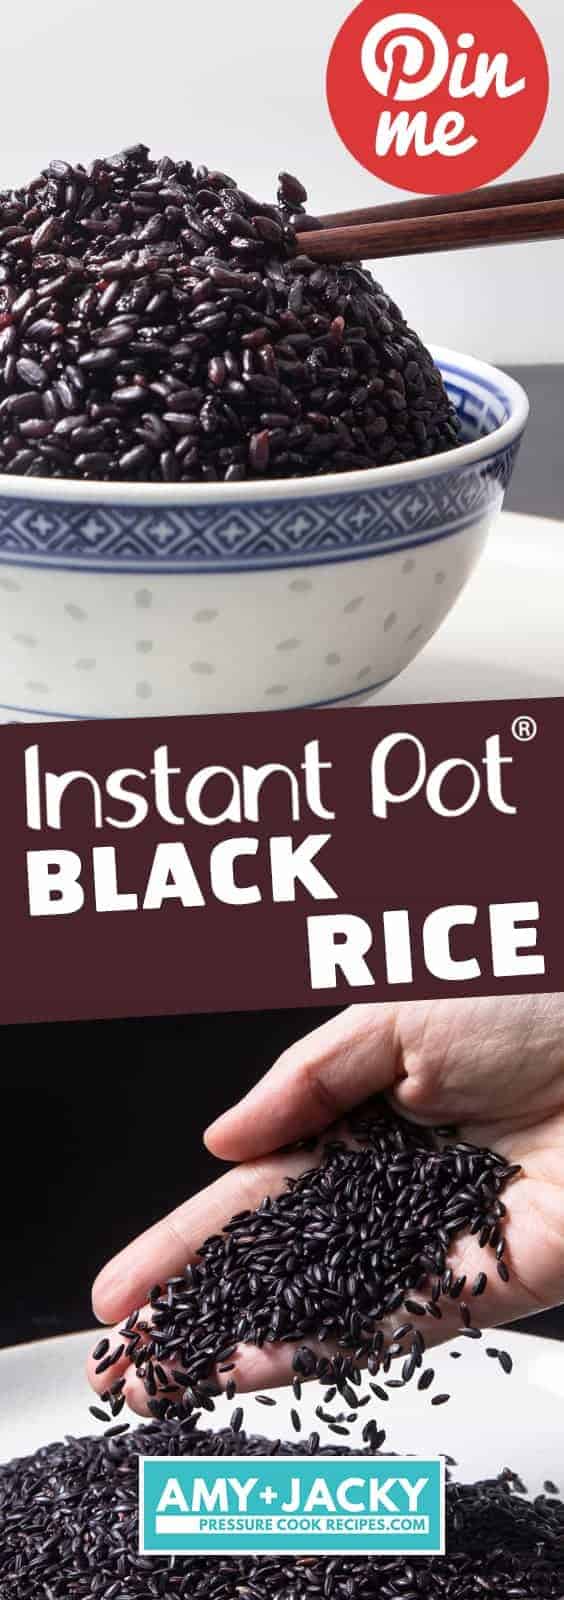 Instant Pot Black Rice | Instant Pot Forbidden Rice | Pressure Cooker Black Rice | Pressure Cooker Forbidden Rice | Instant Pot Rice | Pressure Cooker Rice | Instant Pot Recipes #instantpot #pressurecooker #rice #easy #healthy #recipes